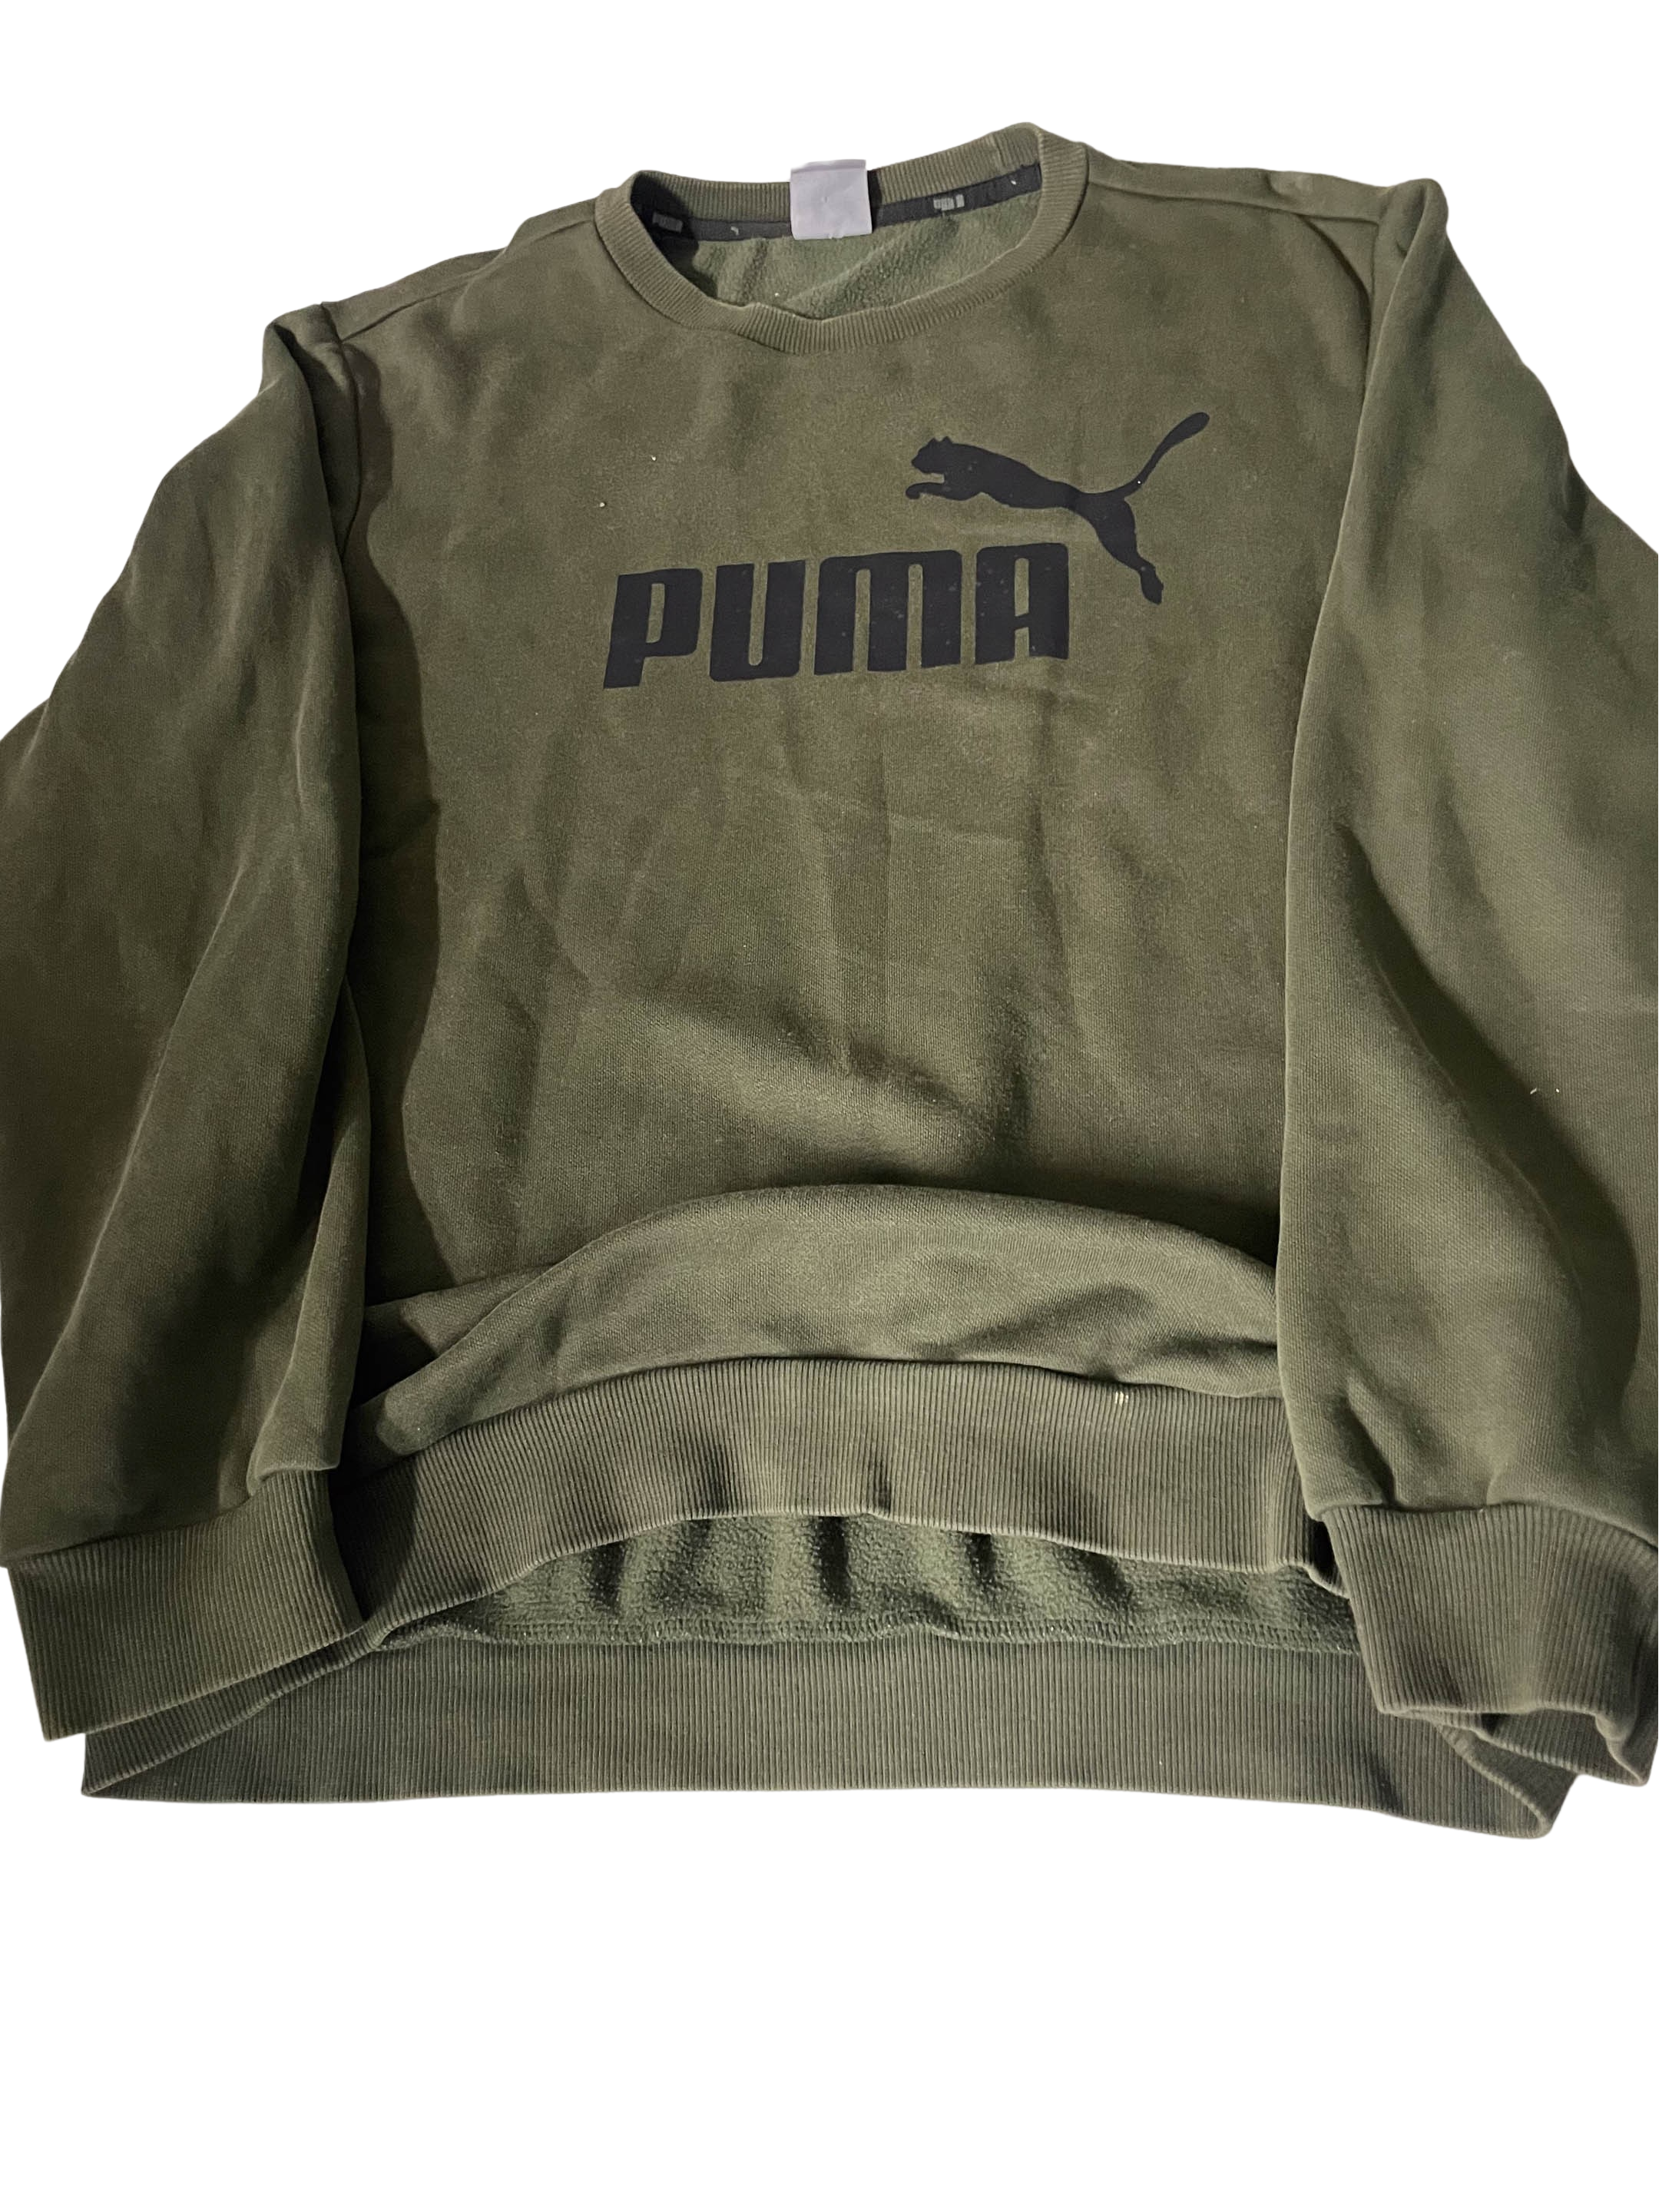 Vintage Khaki Green Puma big logo Medium Mens sweatshirt